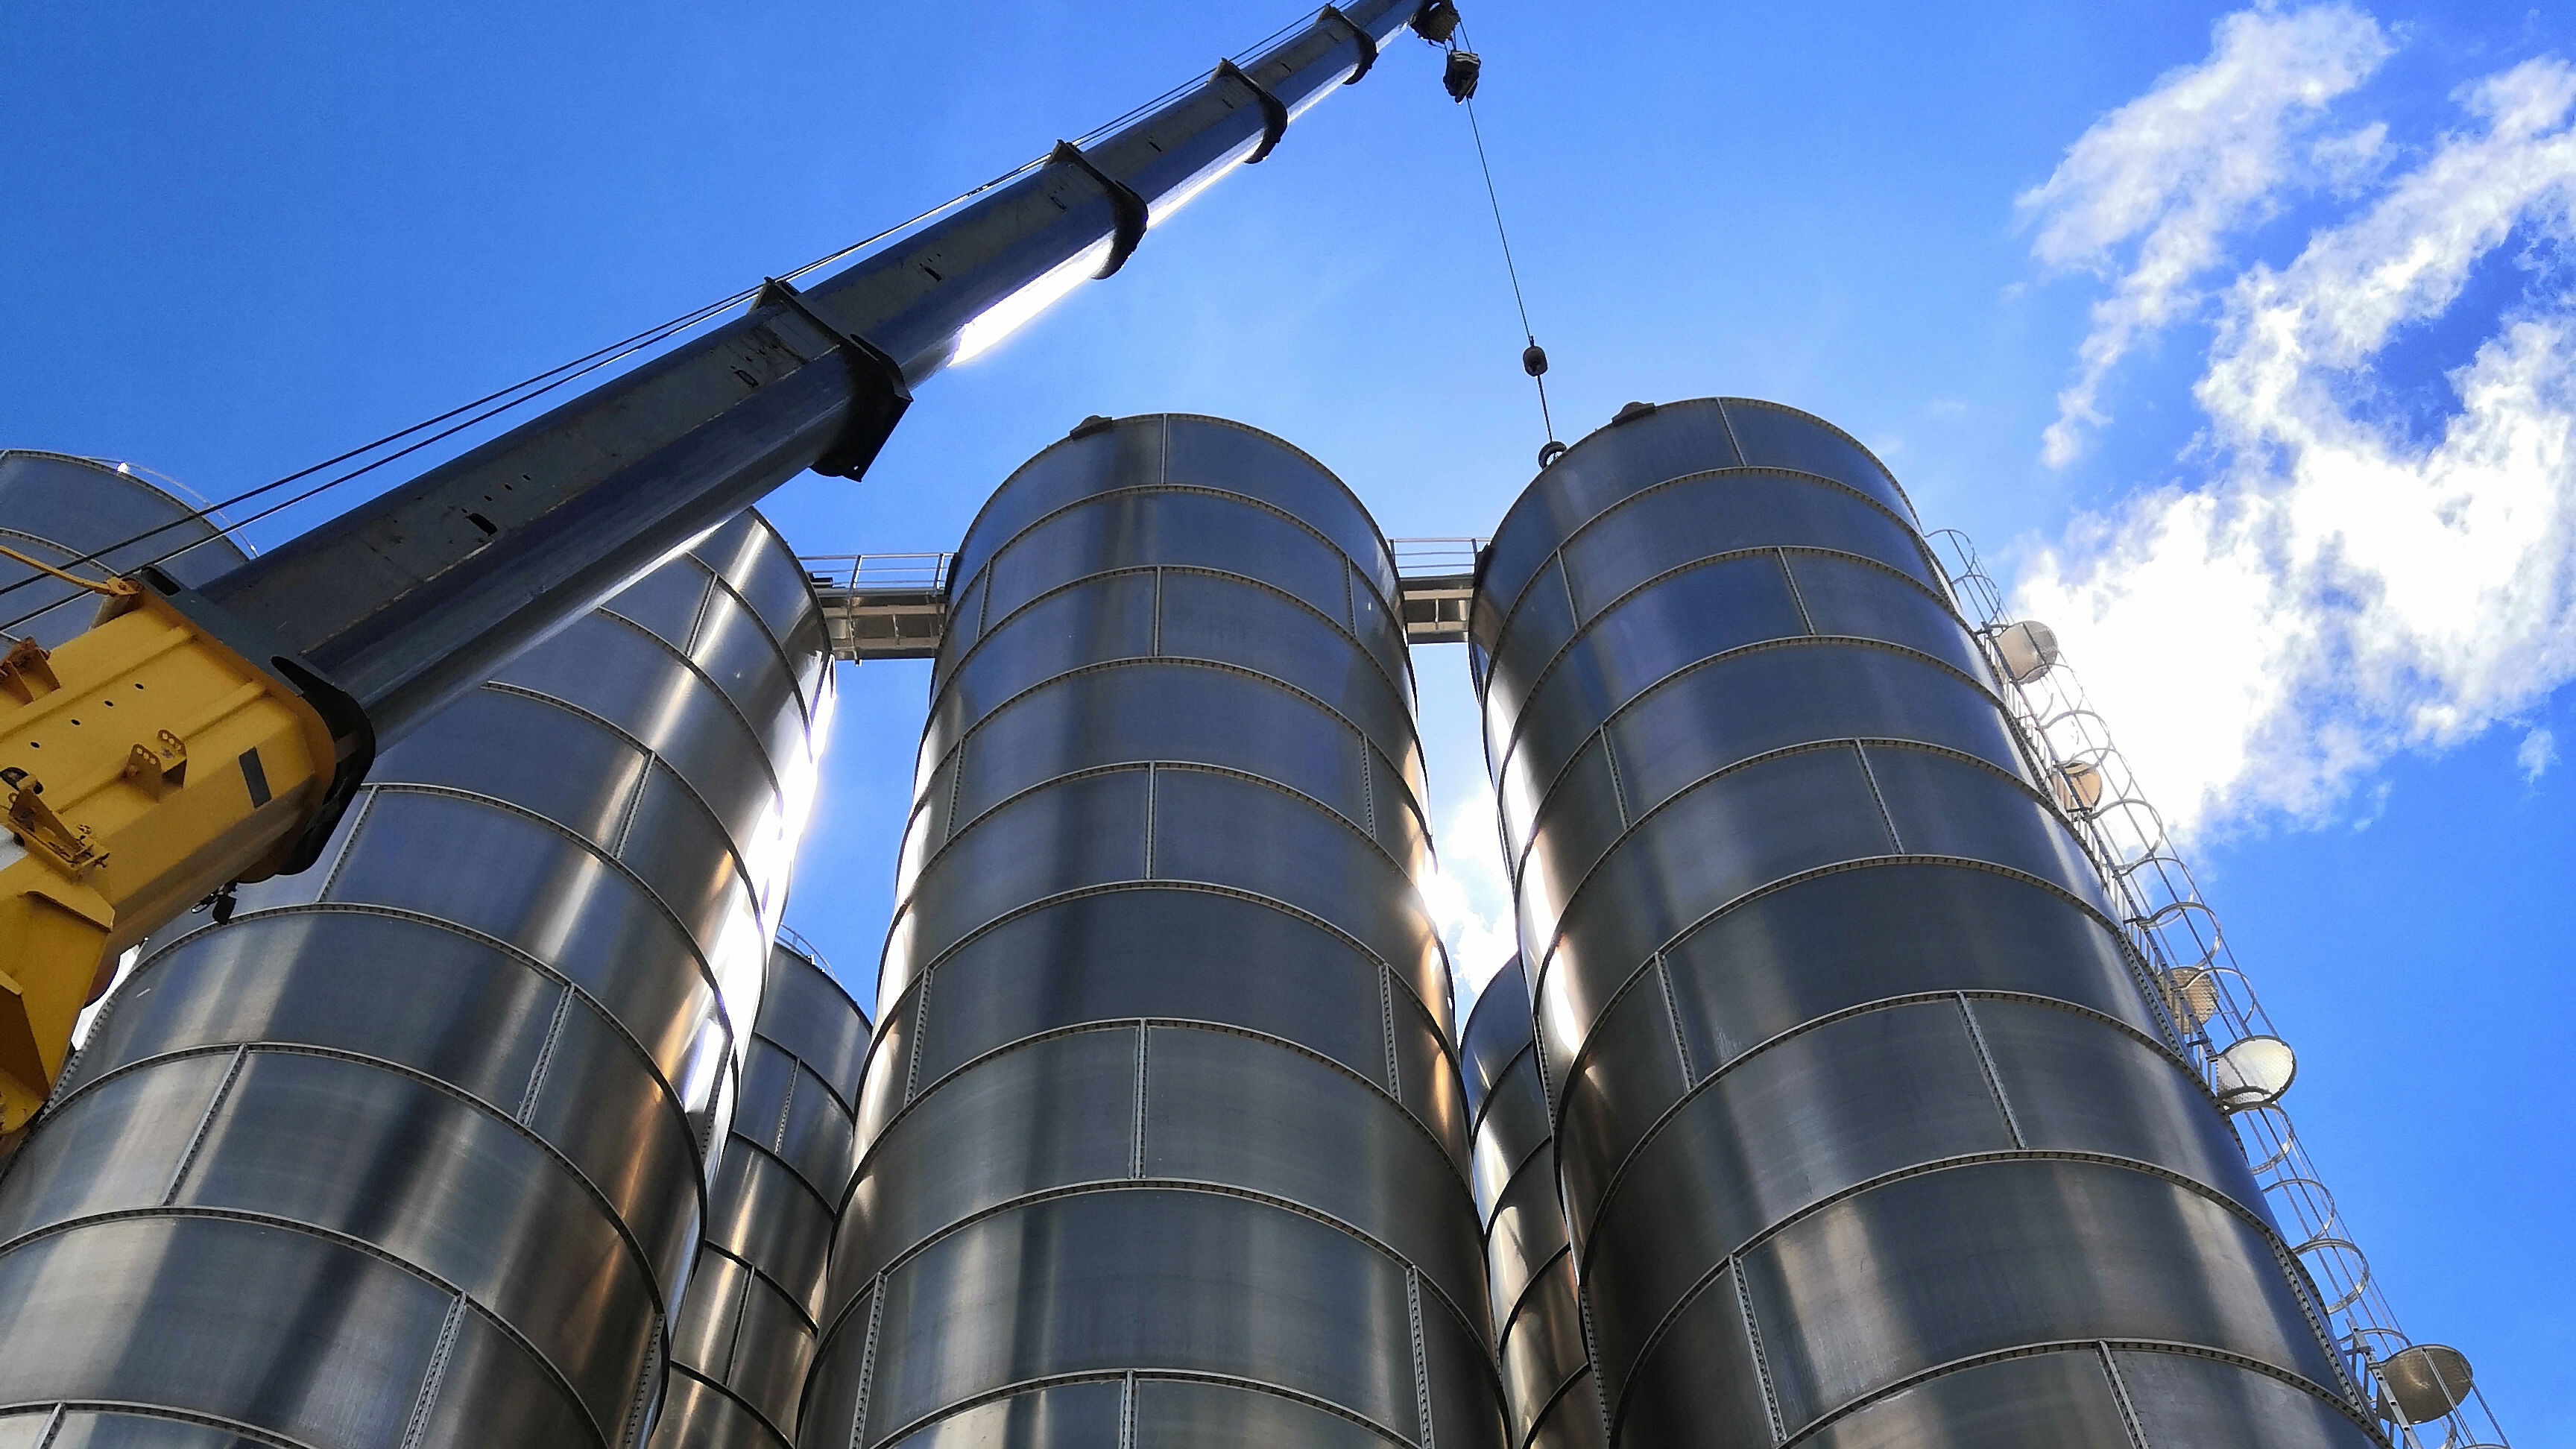 Competitive advantage through storage silos